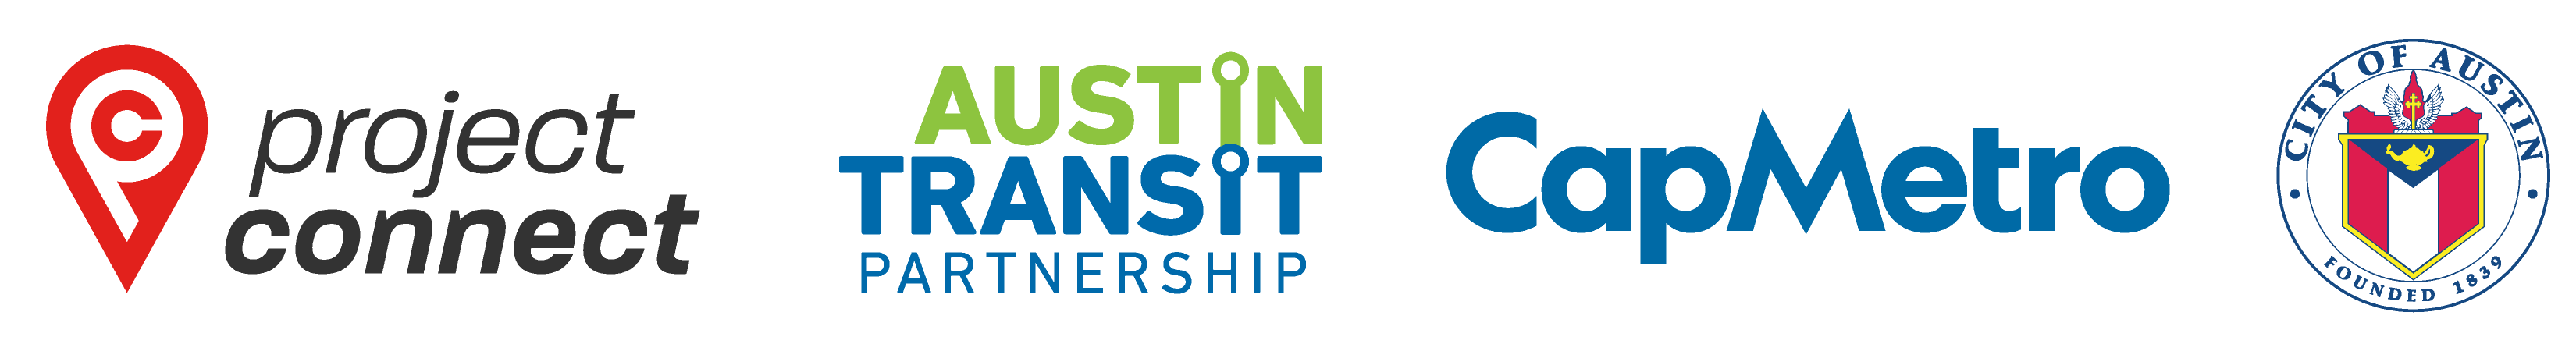 Project Connect, Austin Transit Partnership, Capital Metro, and City of Austin logos